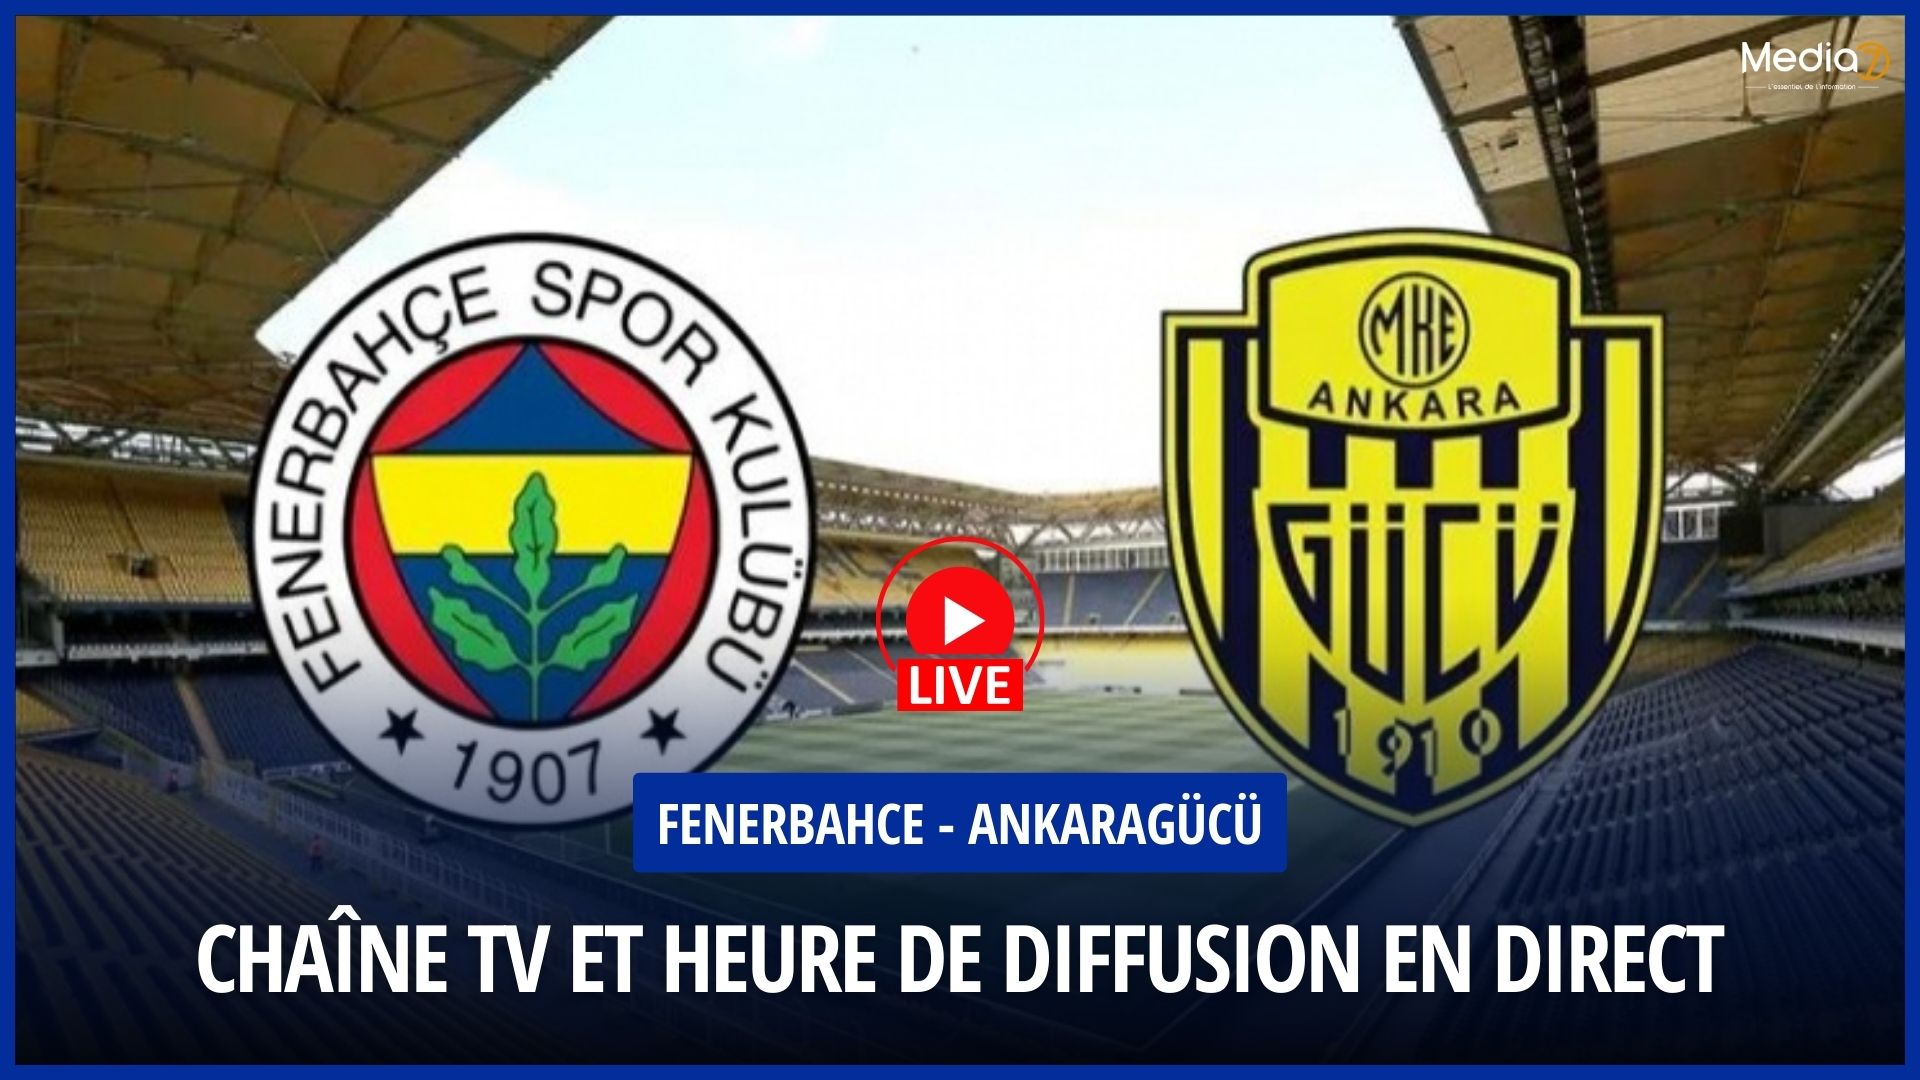 Fenerbahce - Ankaragücü Match: Live Broadcast and TV Channel - Media7